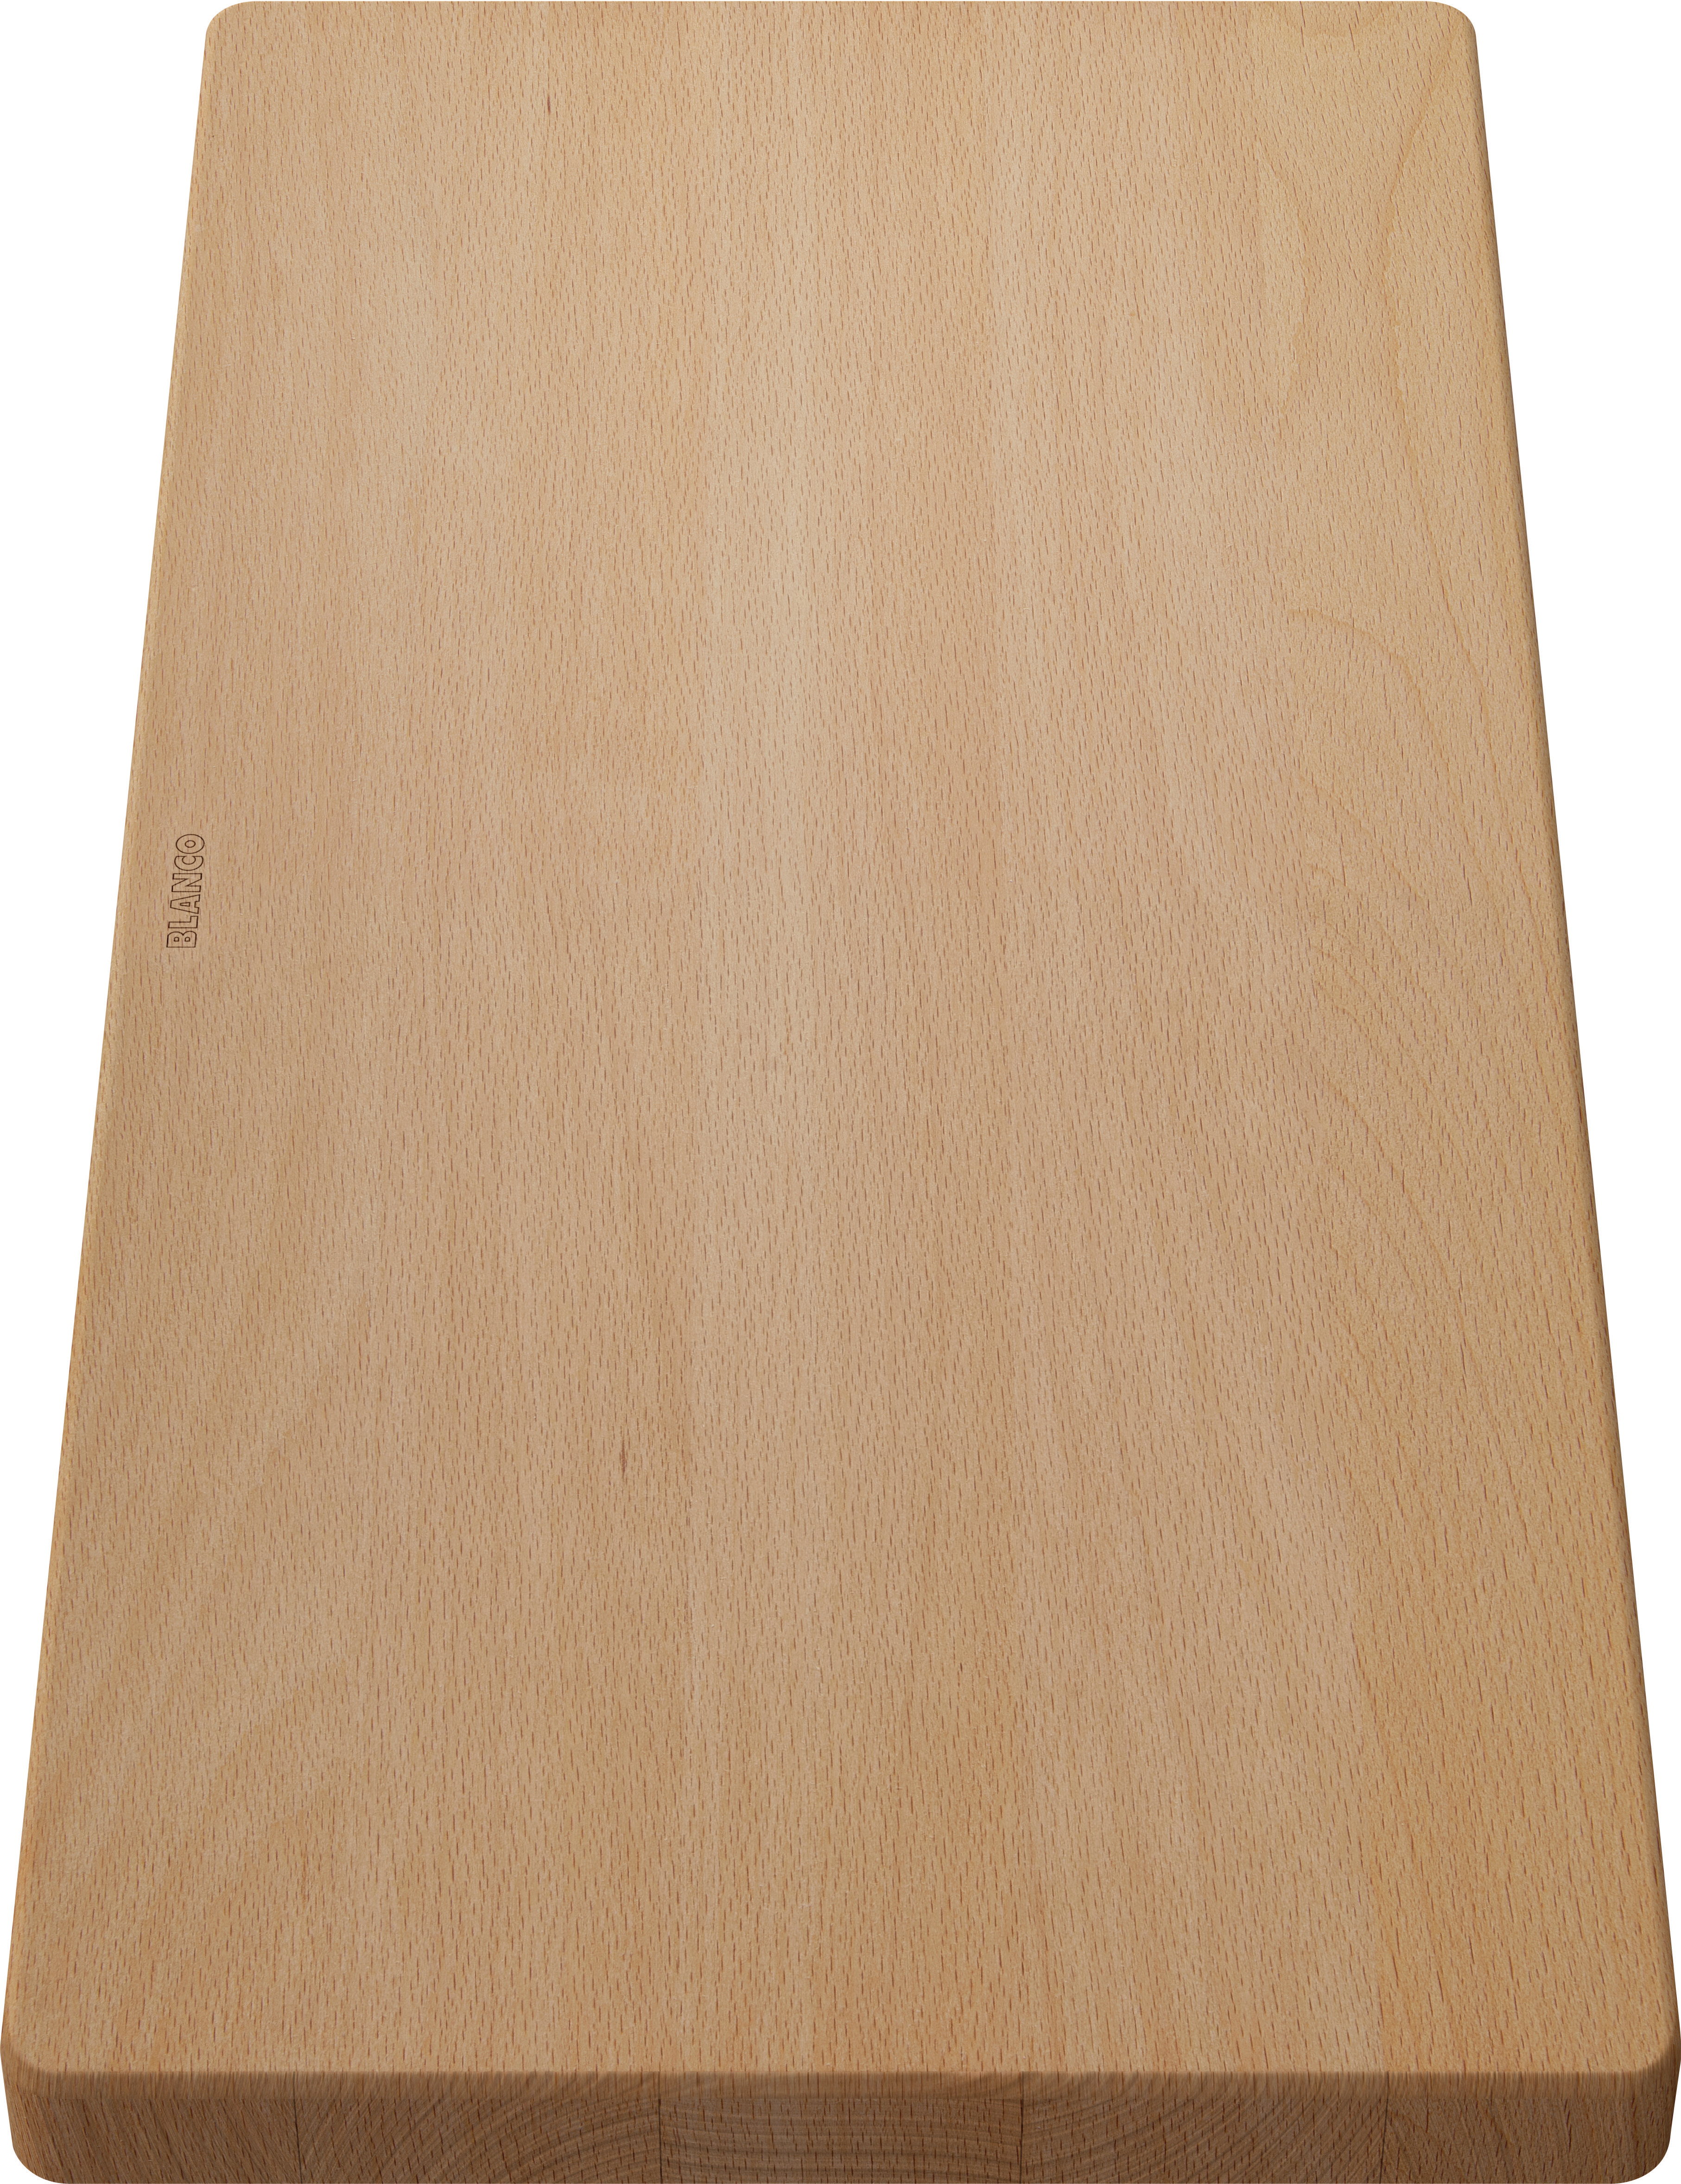 Beech cutting board, 530 x 260 mm